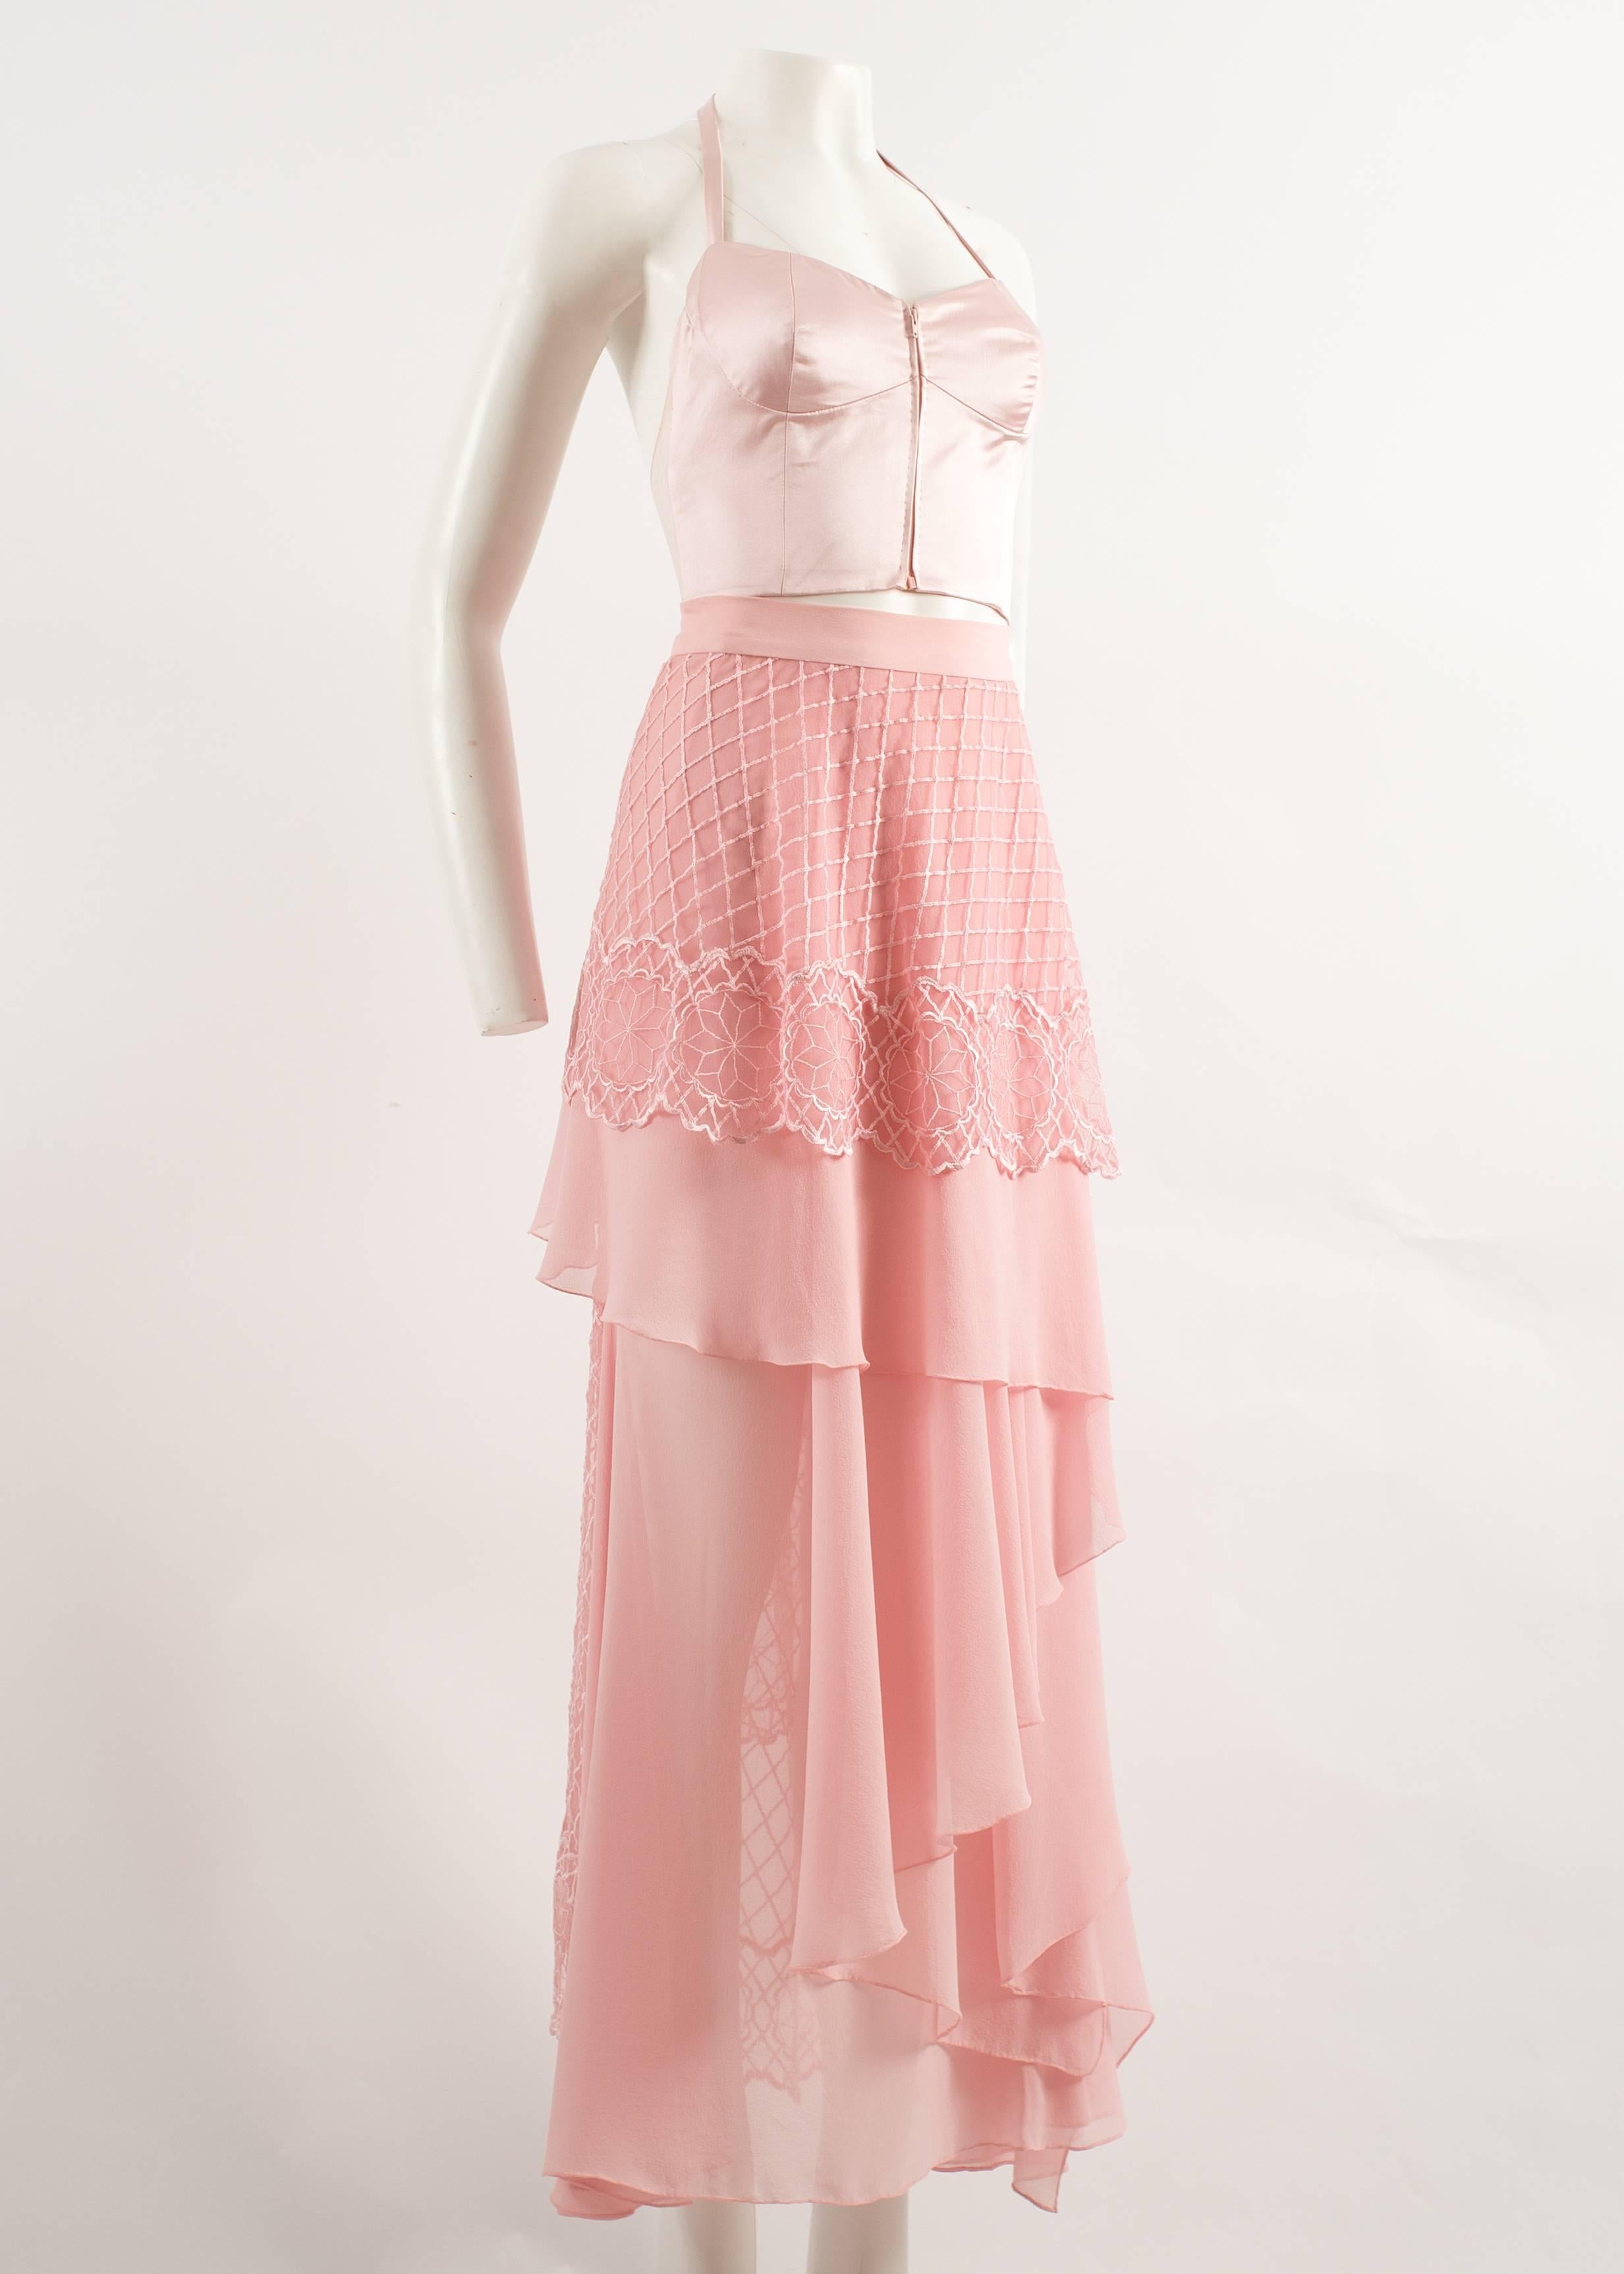 Atelier Versace Autumn-Winter 1993 baby pink embellished 3 piece skirt suit  4